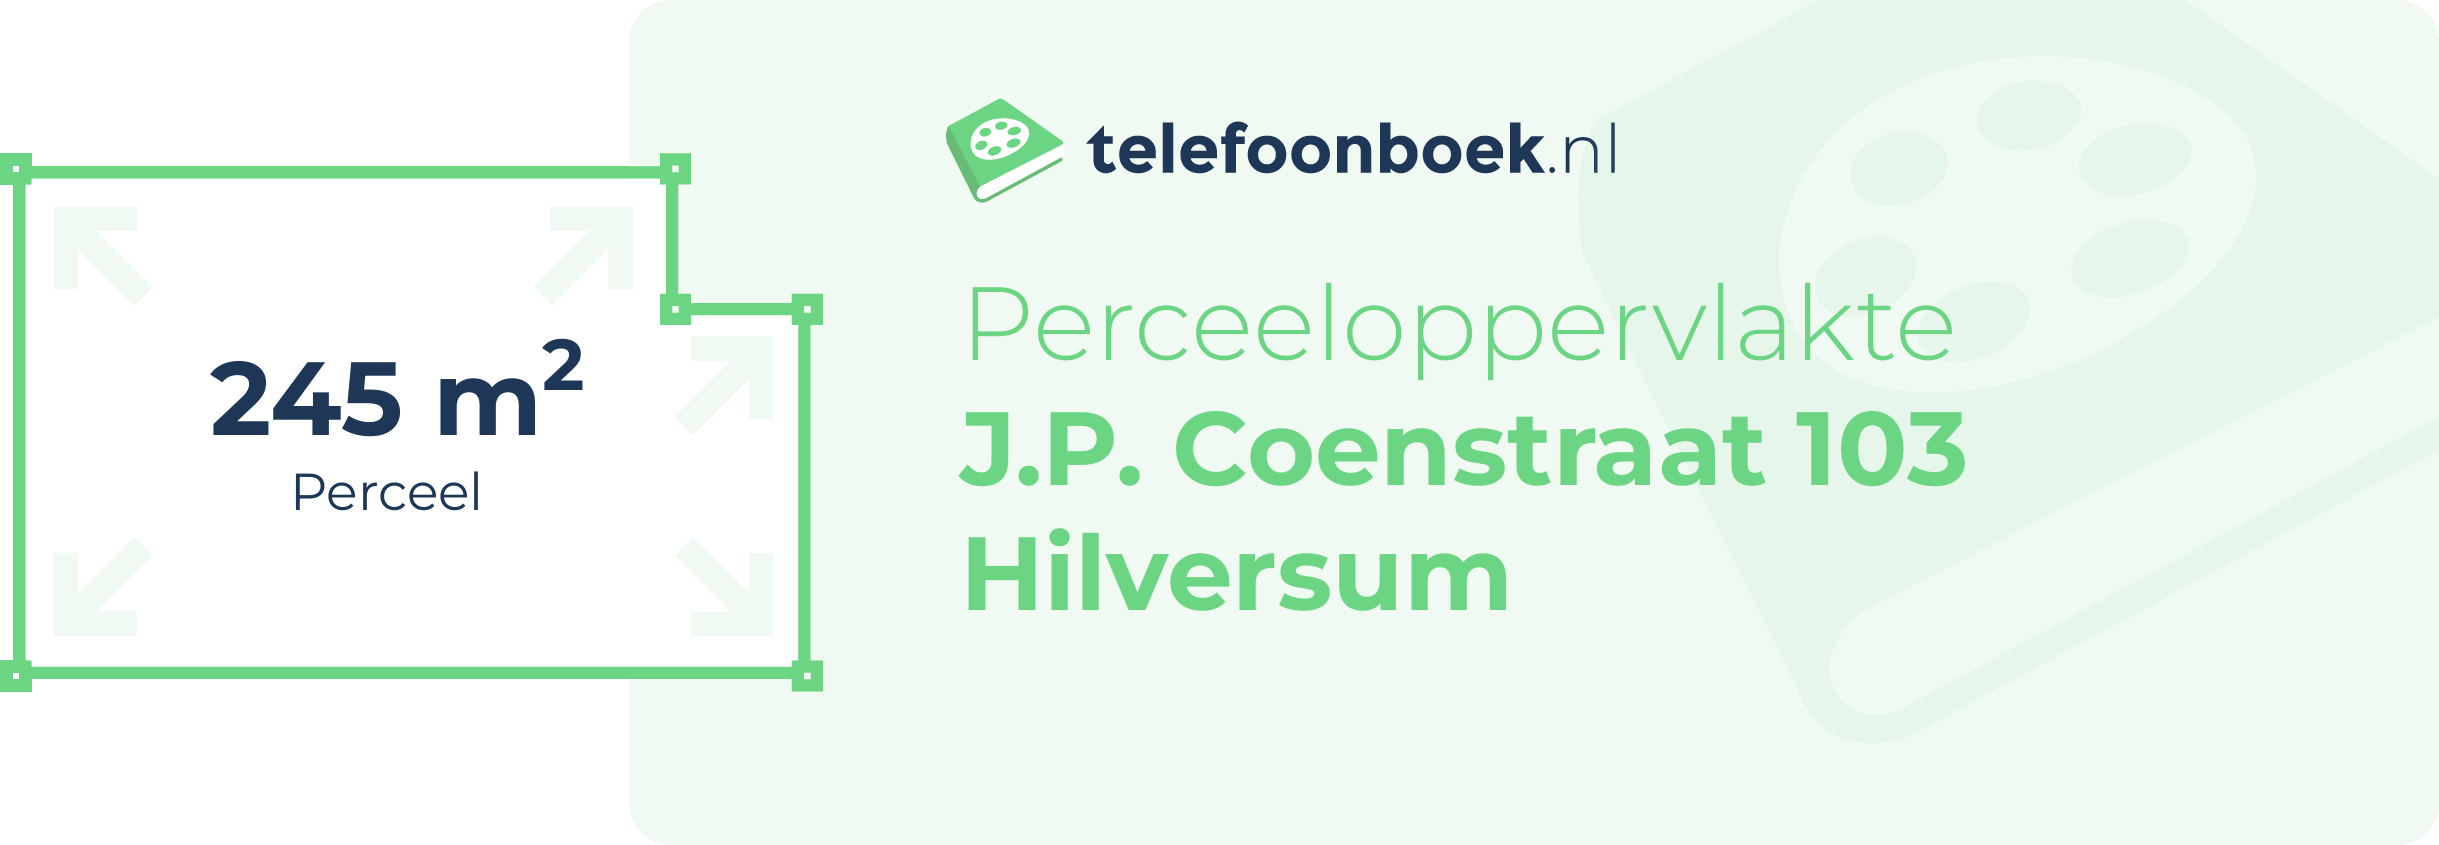 Perceeloppervlakte J.P. Coenstraat 103 Hilversum